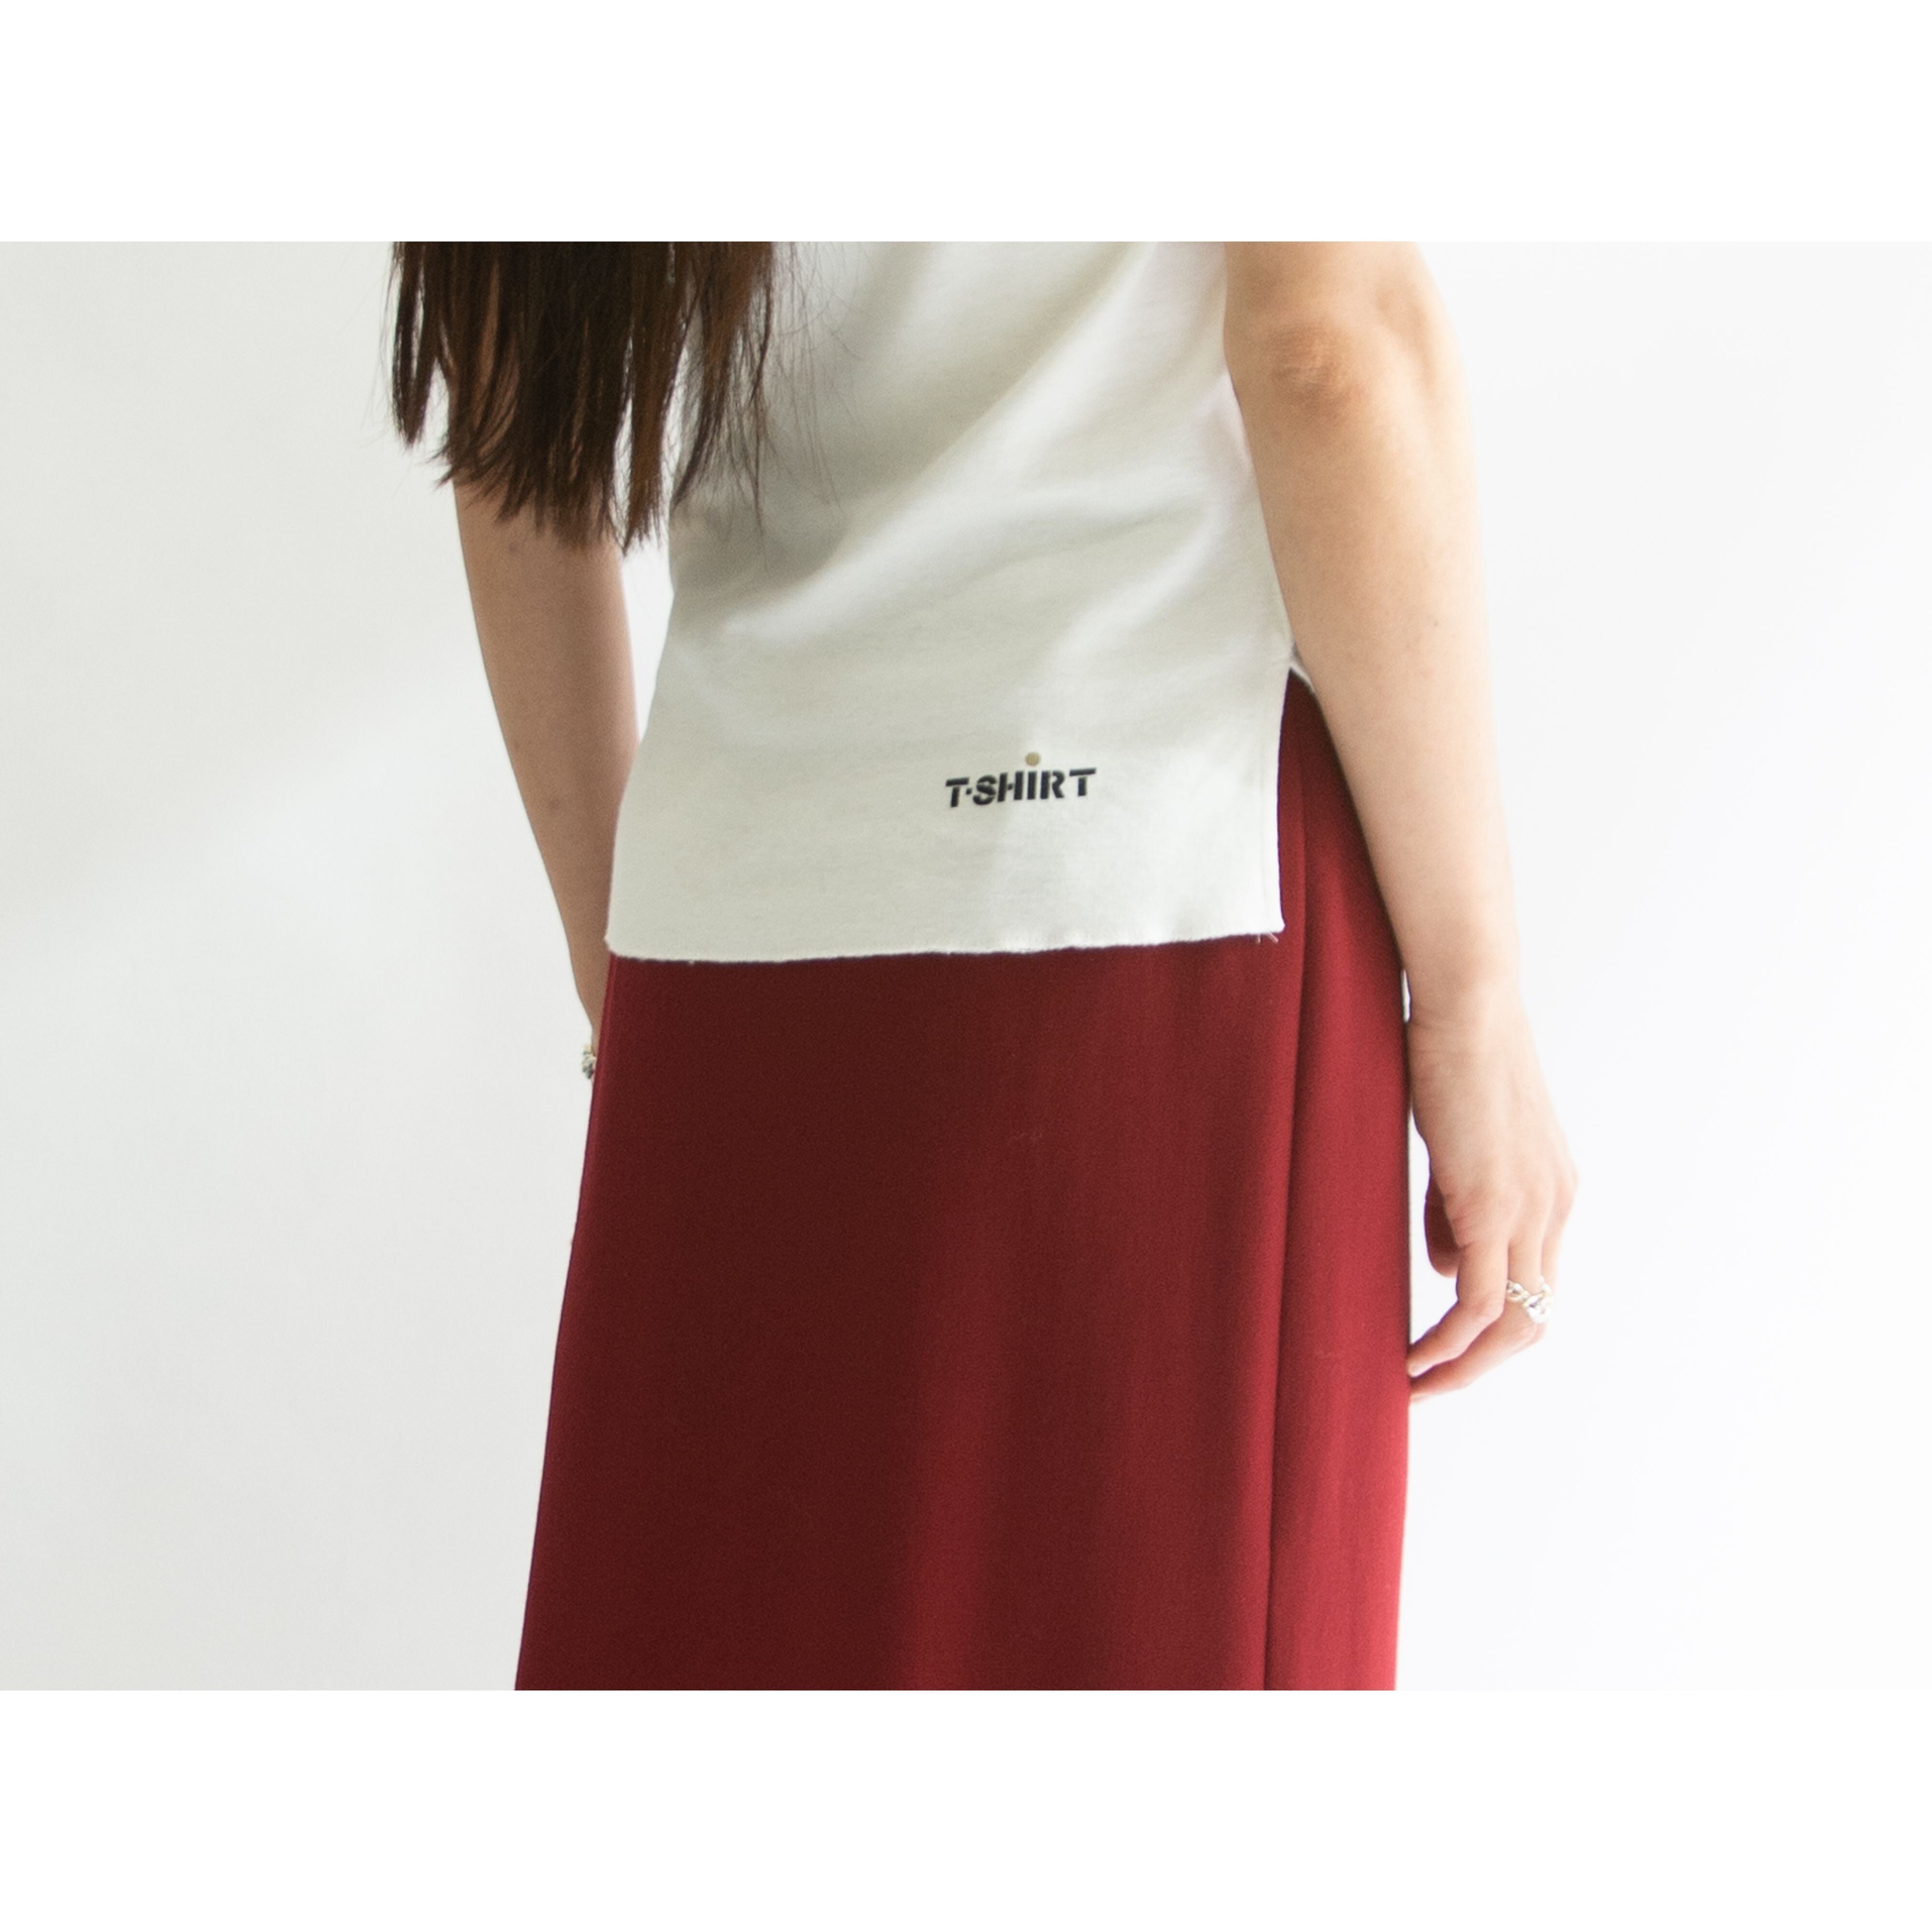 SONIA RYKIEL】Made in France 100% Cotton T-shirt（ソニアリキエル フランス製 コットンTシャツ） |  MASCOT/E